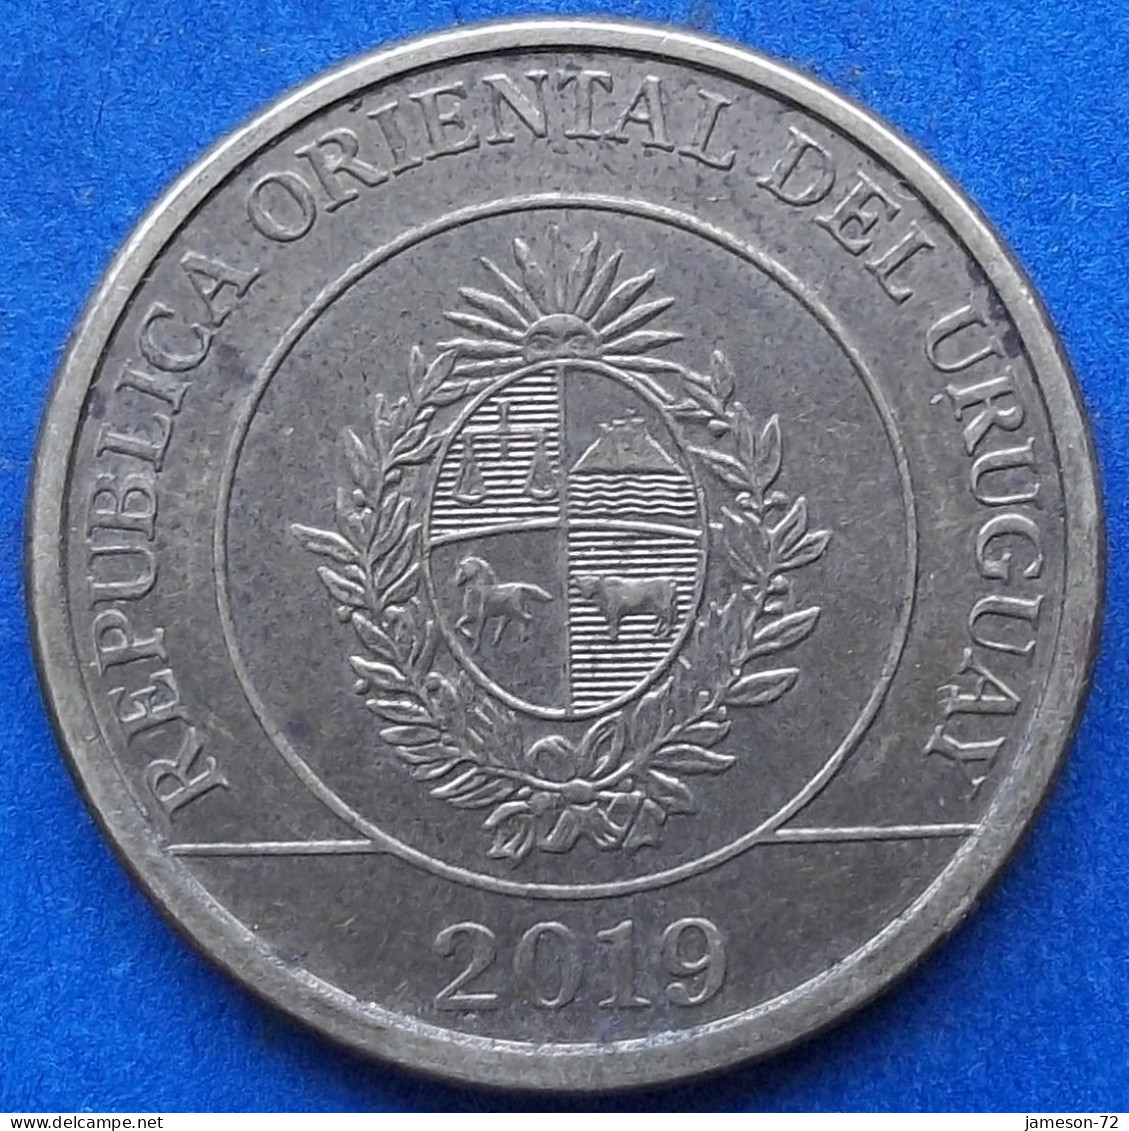 URUGUAY - 2 Pesos 2019 "Carpincho" KM# 136 Monetary Reform (1993) - Edelweiss Coins - Uruguay